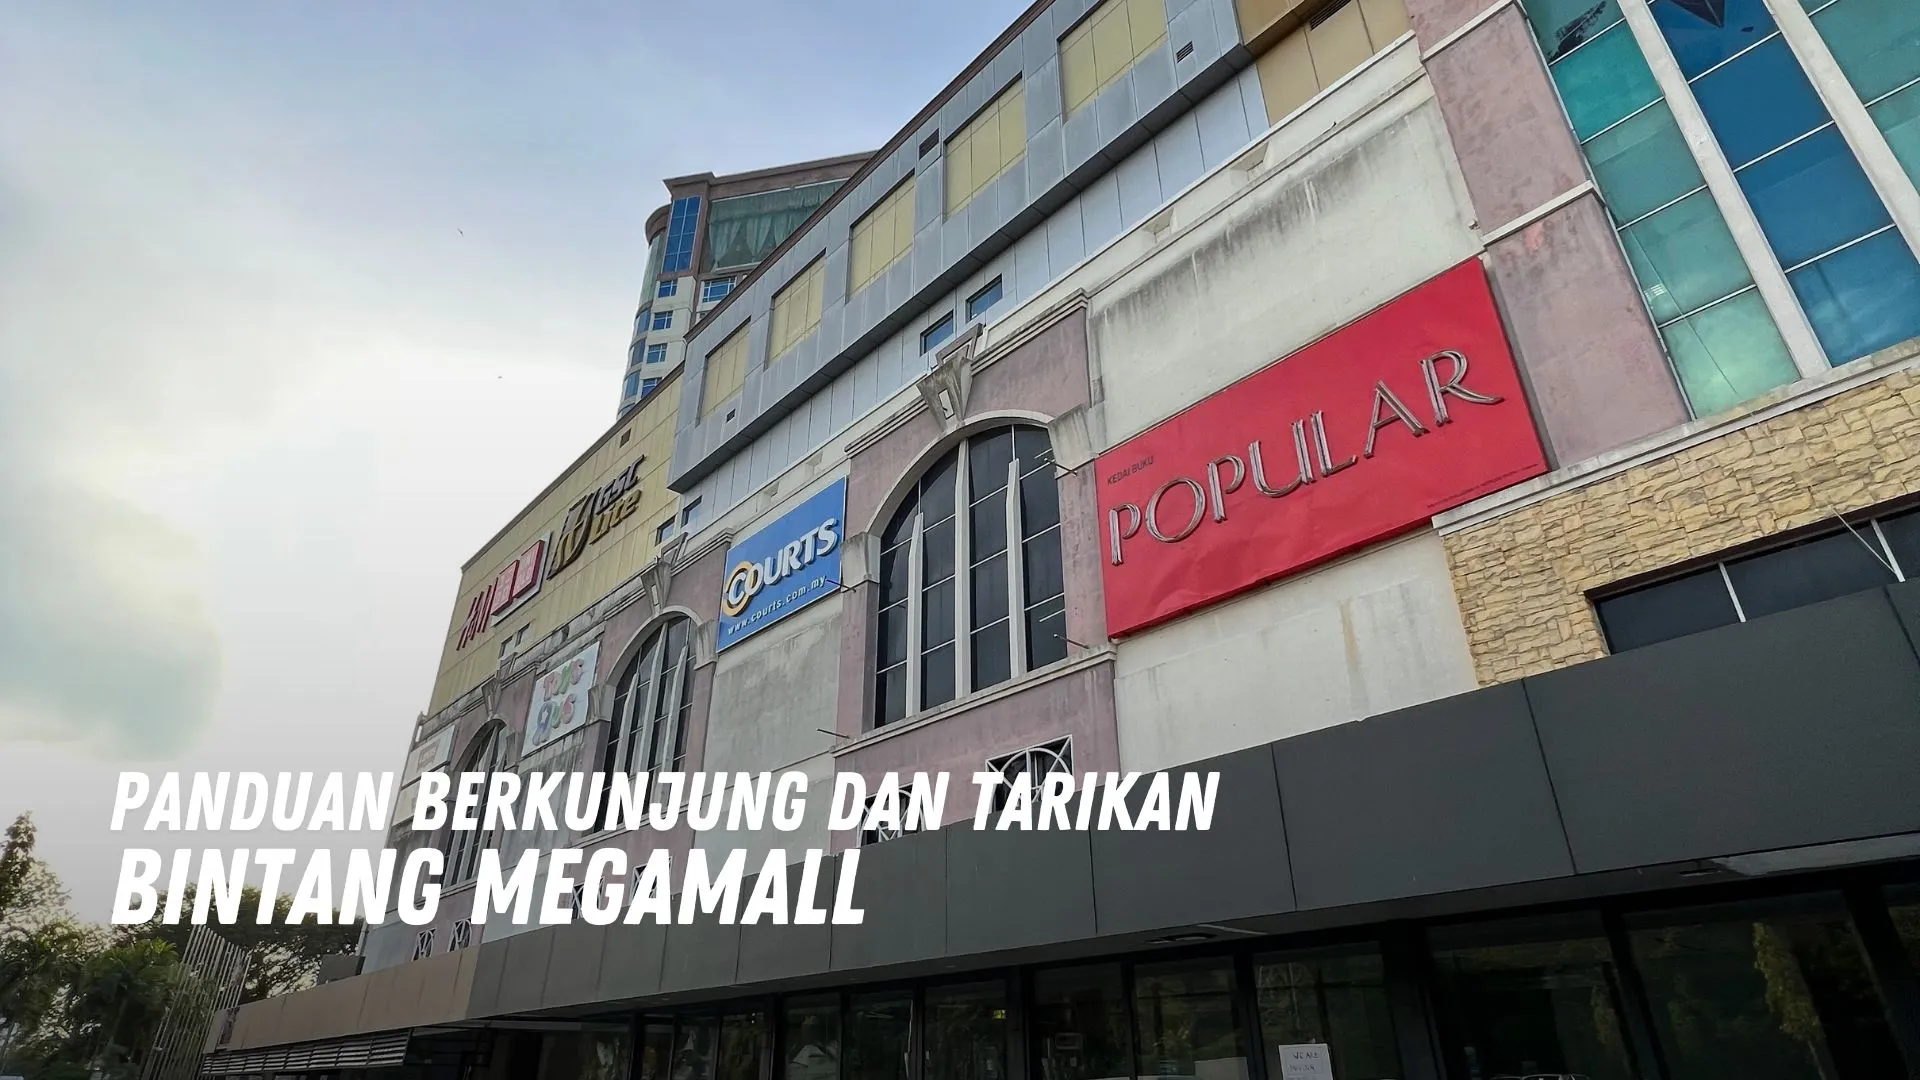 Review Bintang Megamall Malaysia